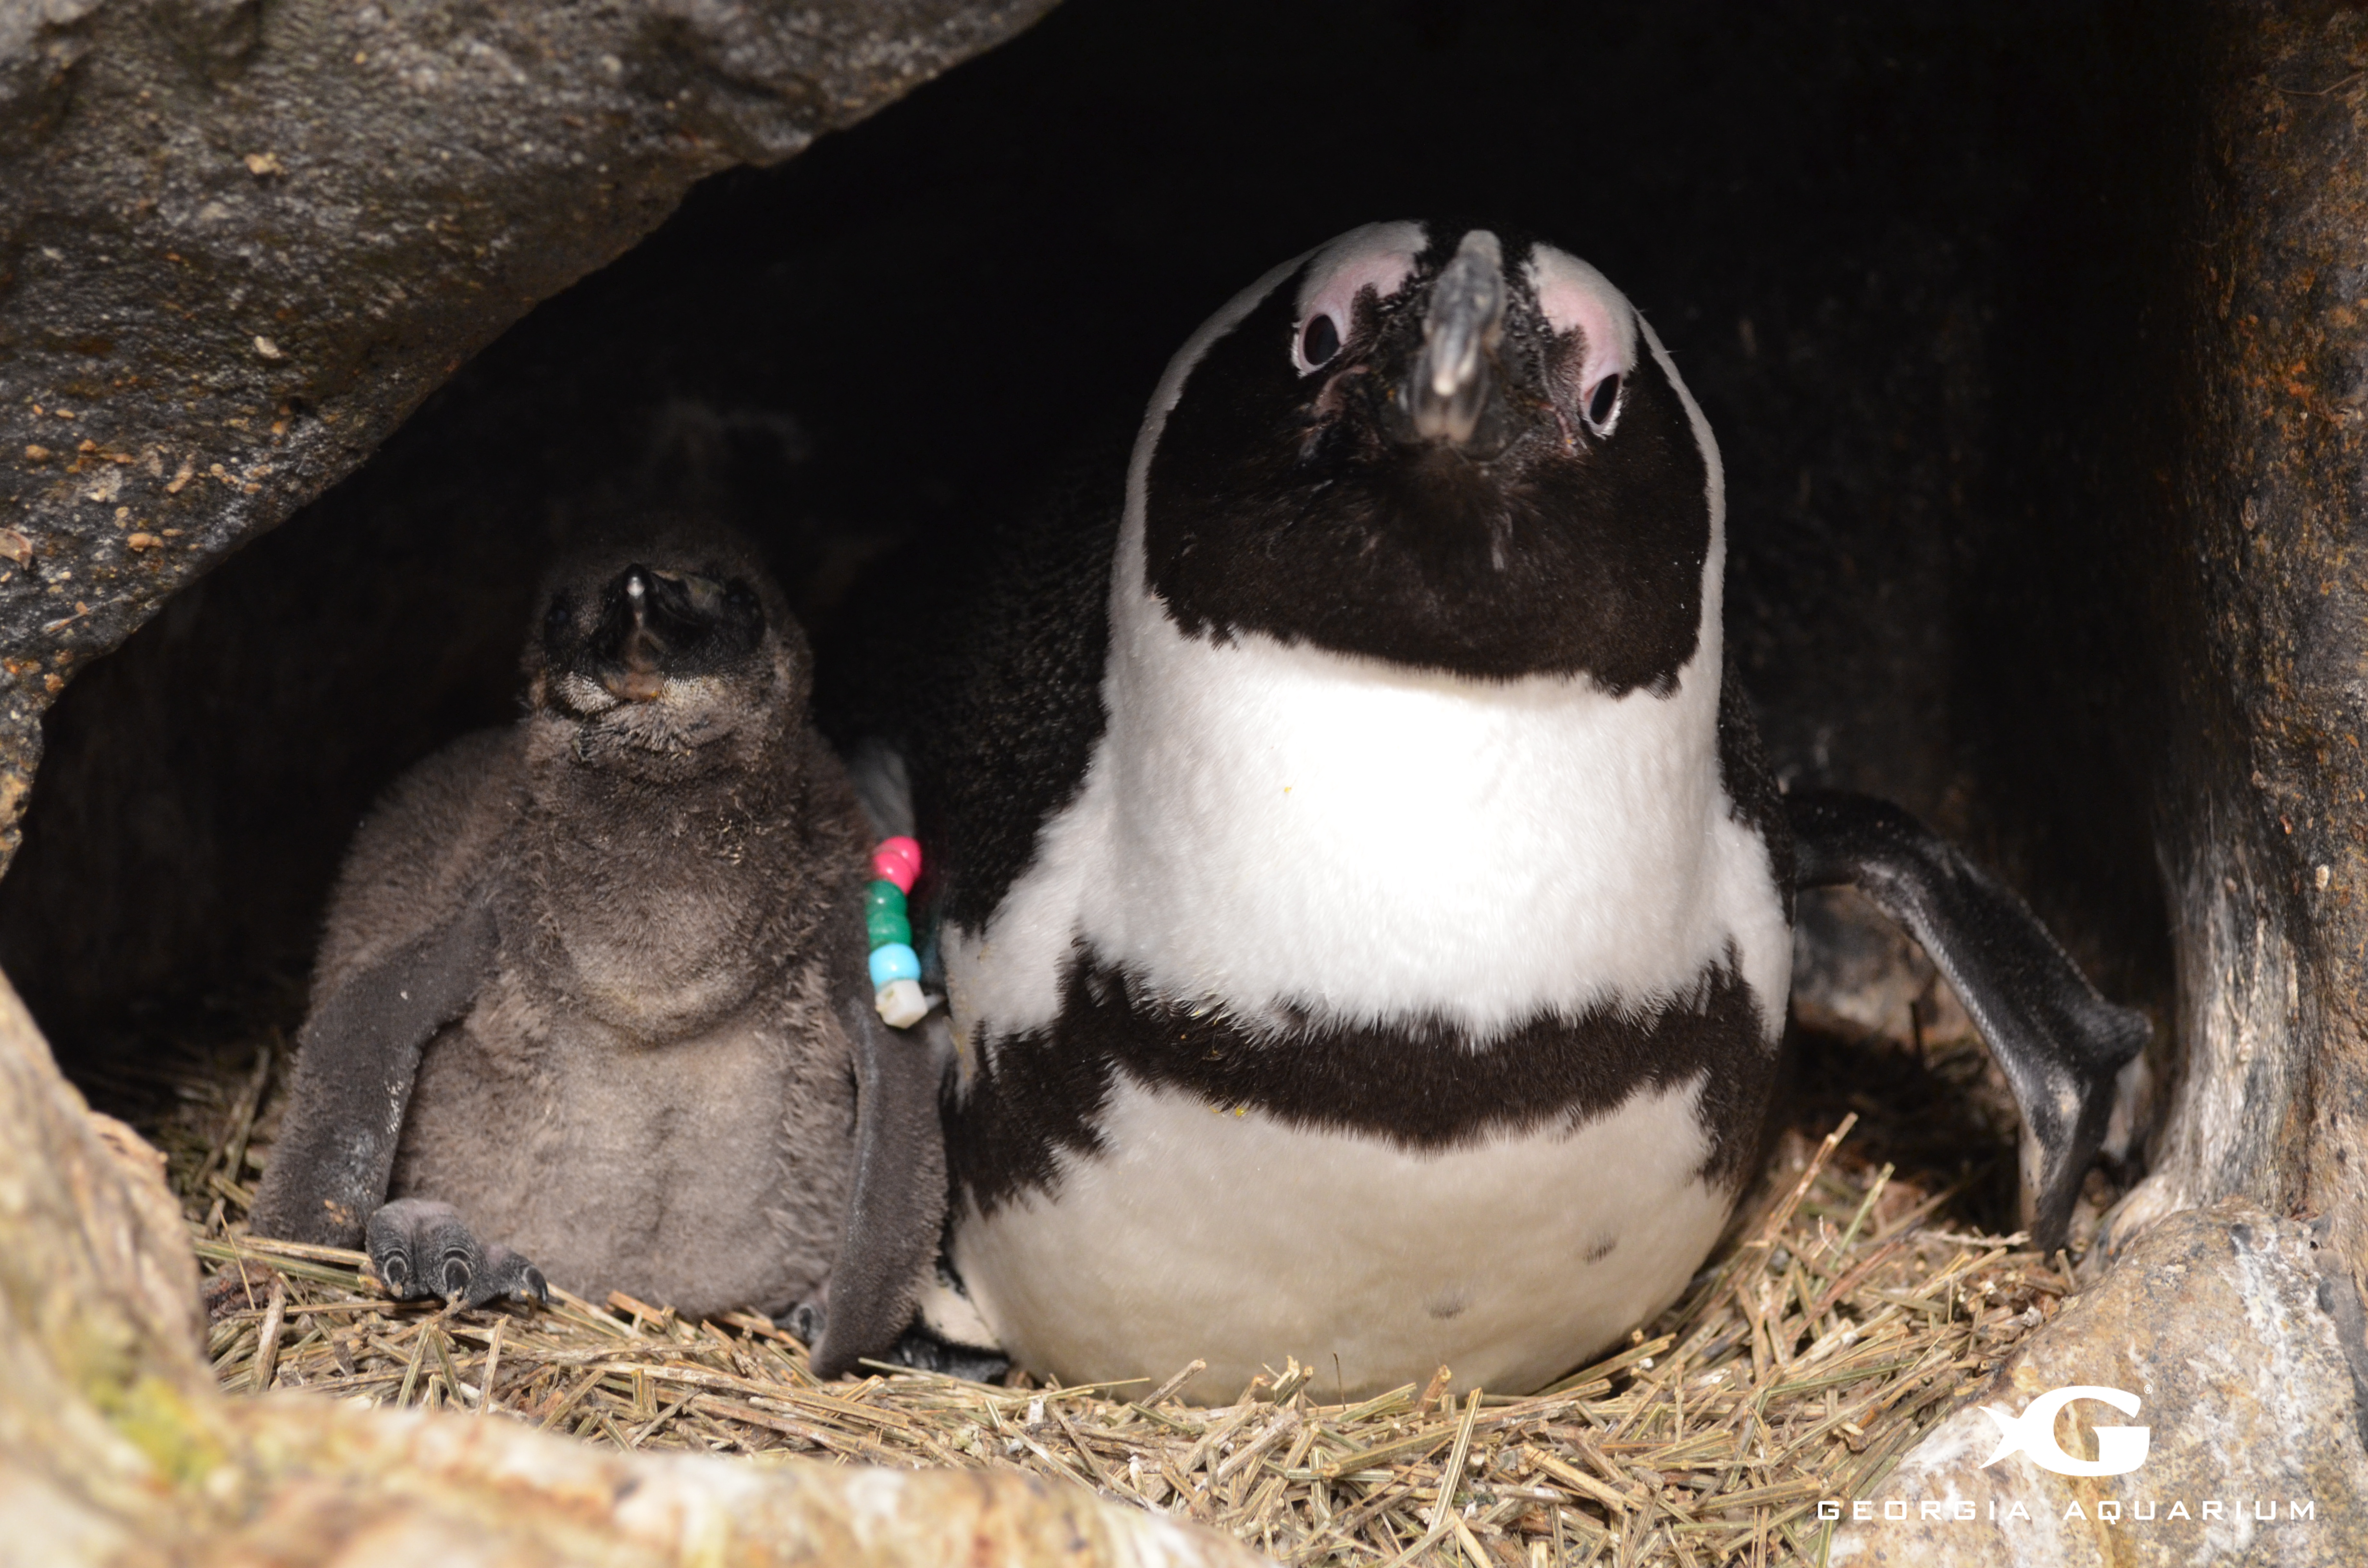 Atlanta aquarium: Watch live penguins while you're stuck at home